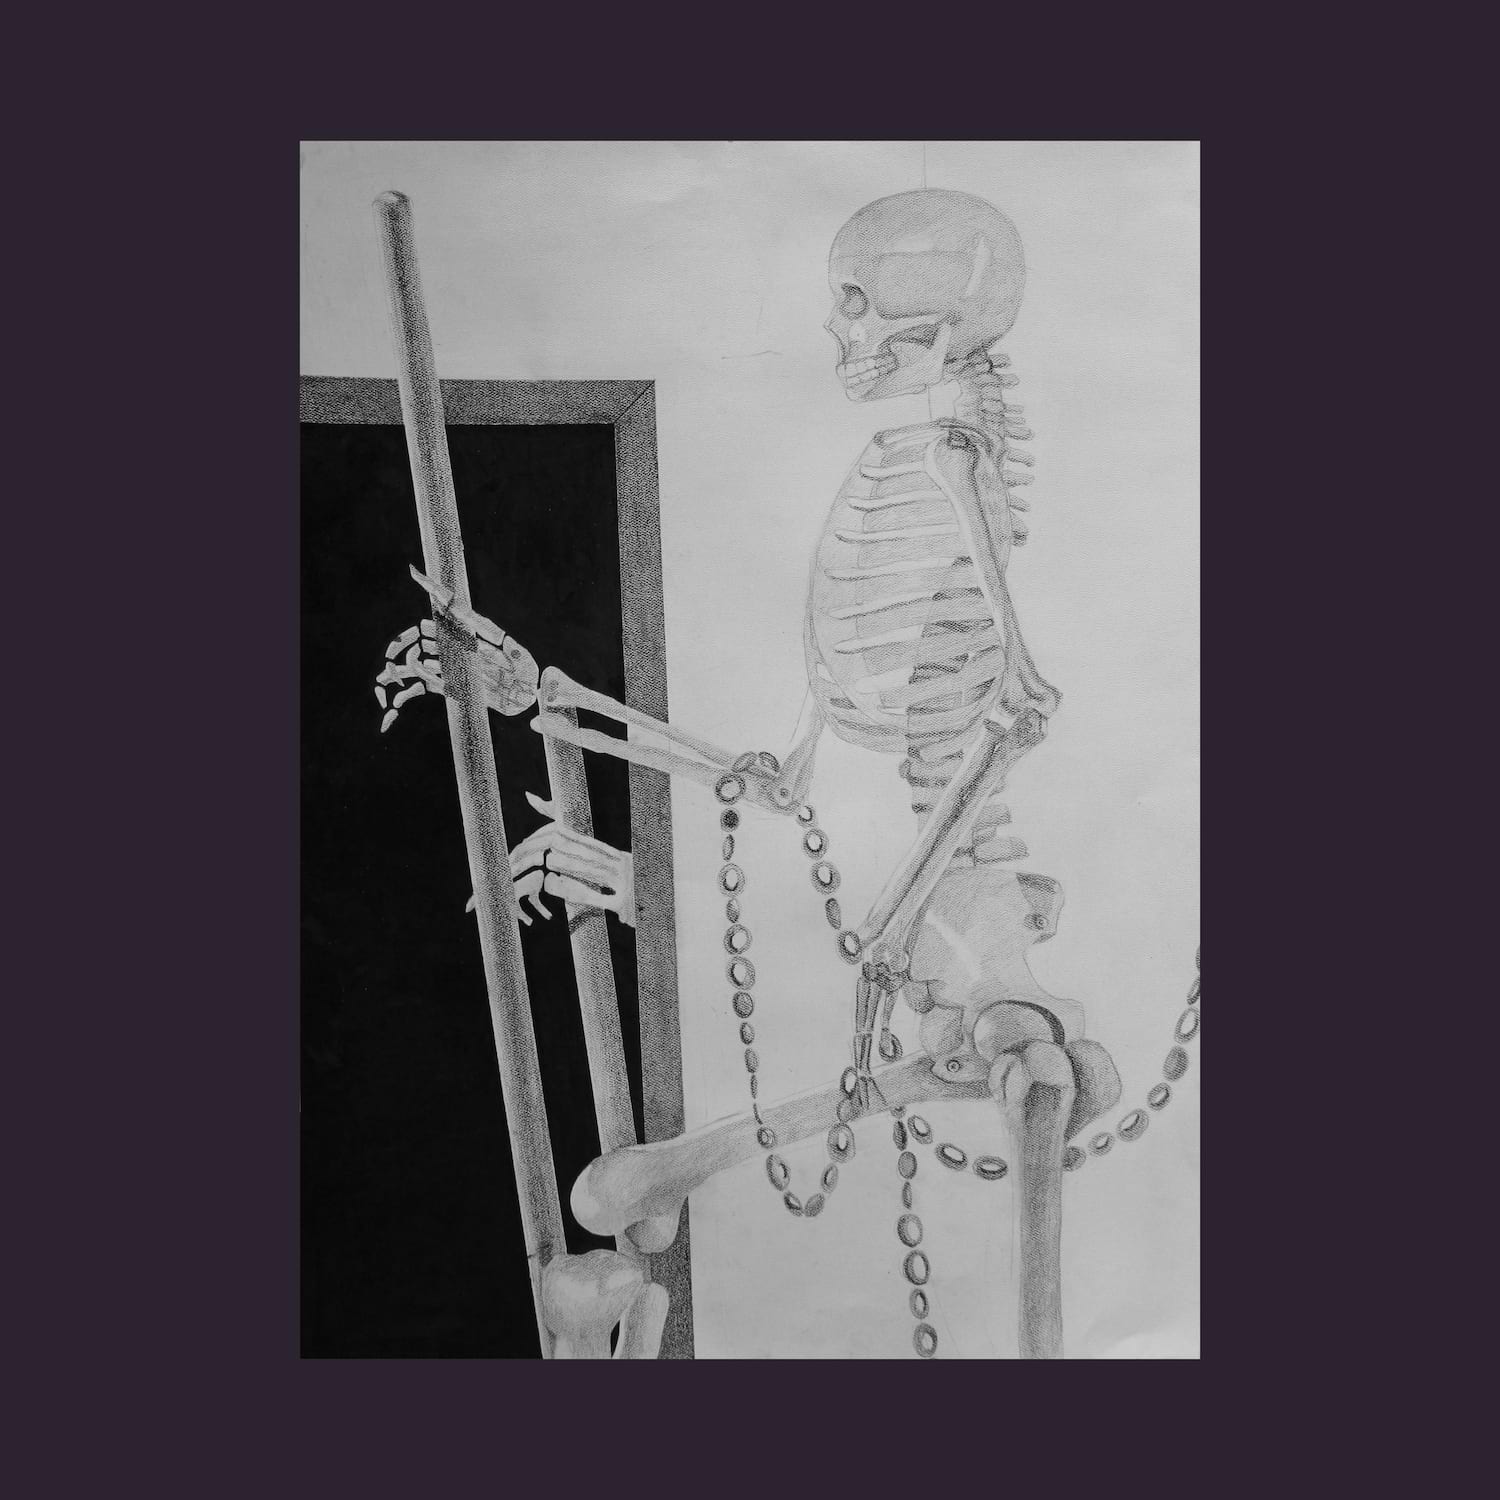  Juliana Castano Olivares. Skeleton with Mirror. Crayon. 2019.